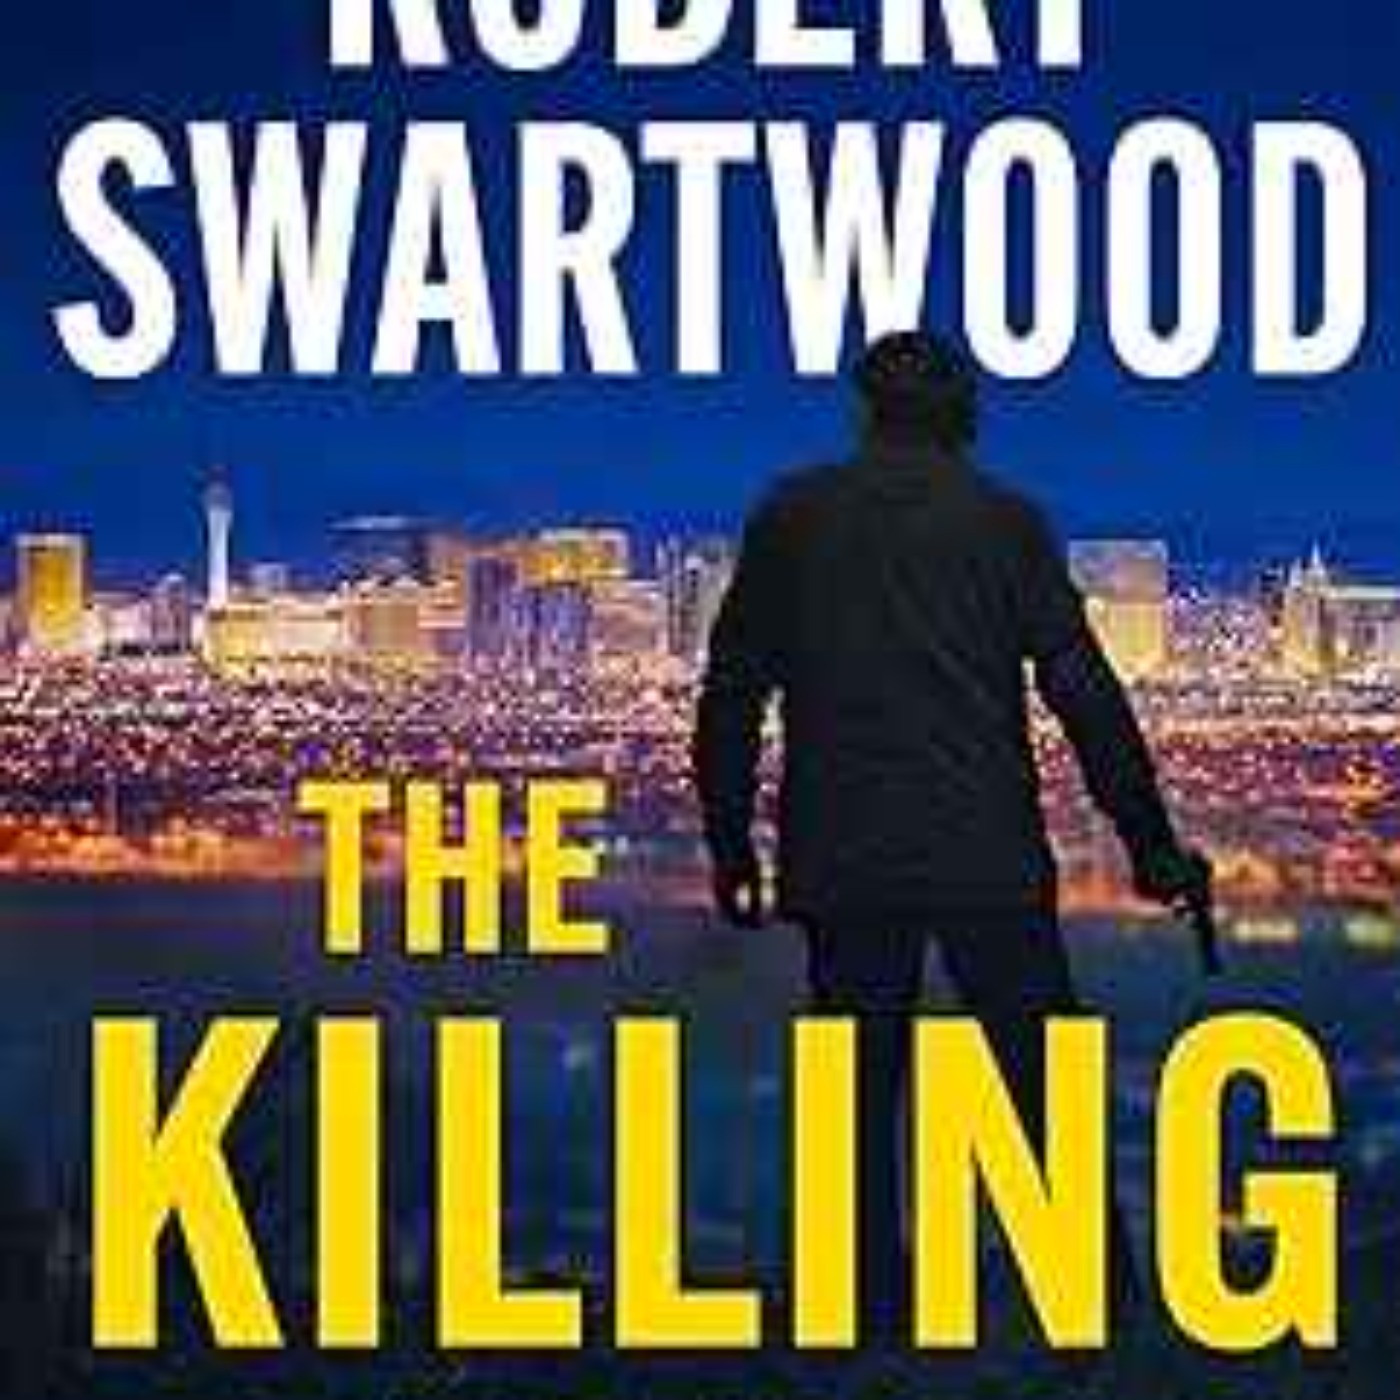 Robert Swartwood - The Killing Room